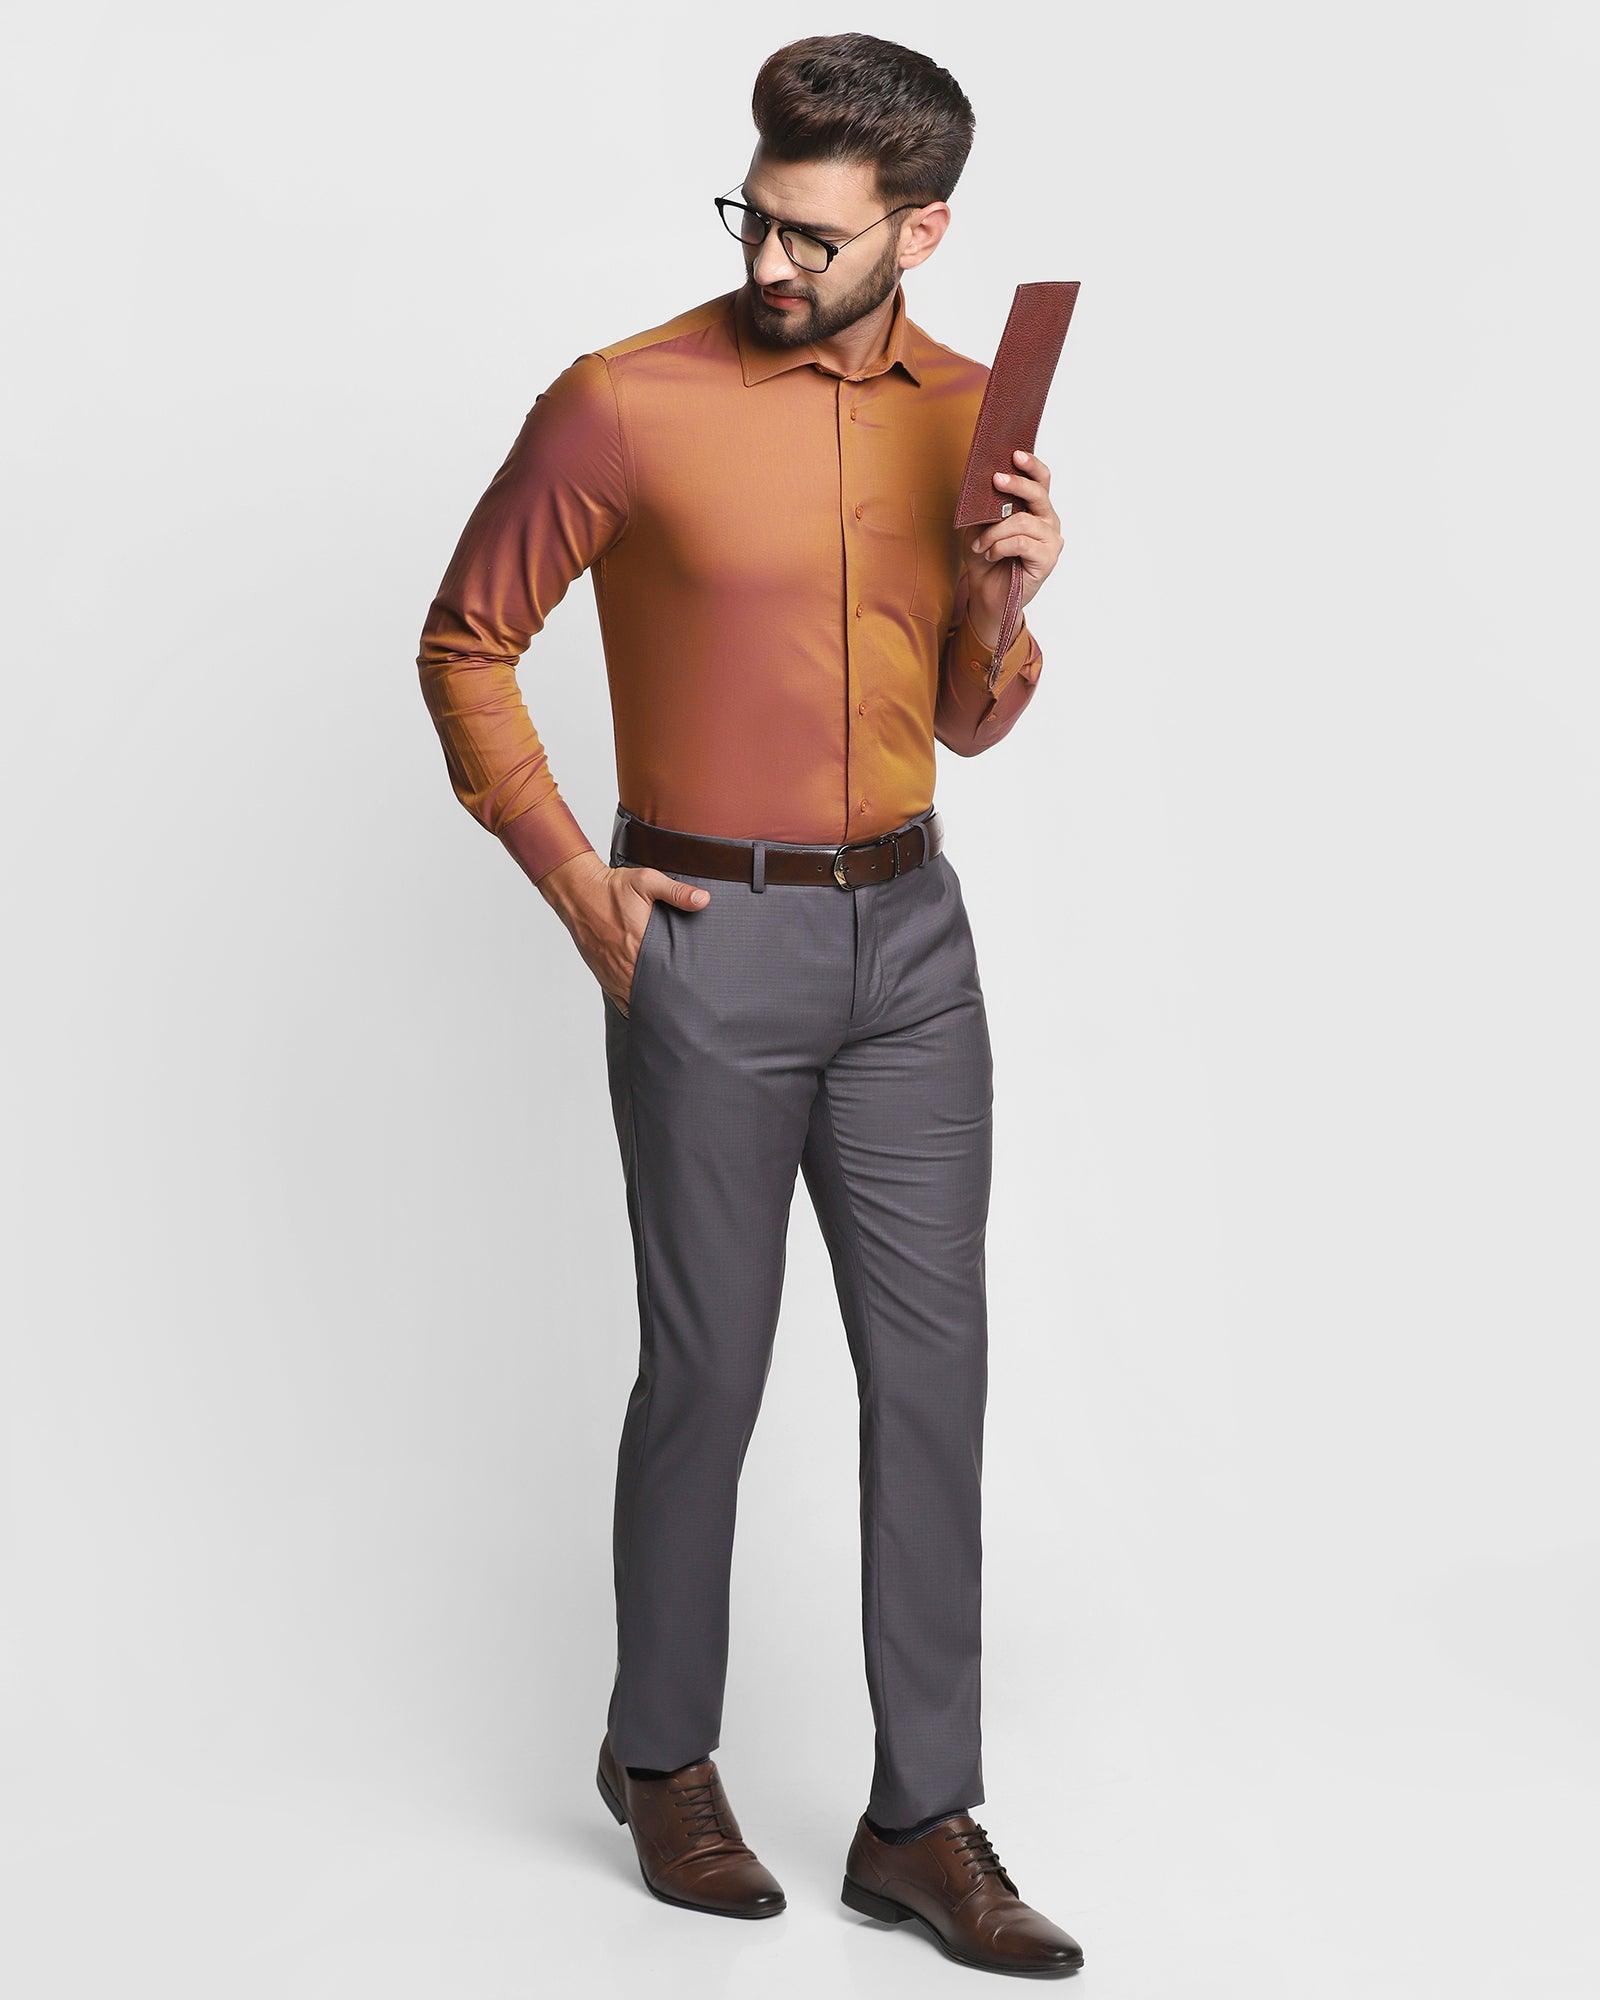 Formal Rust Solid Shirt - Abital